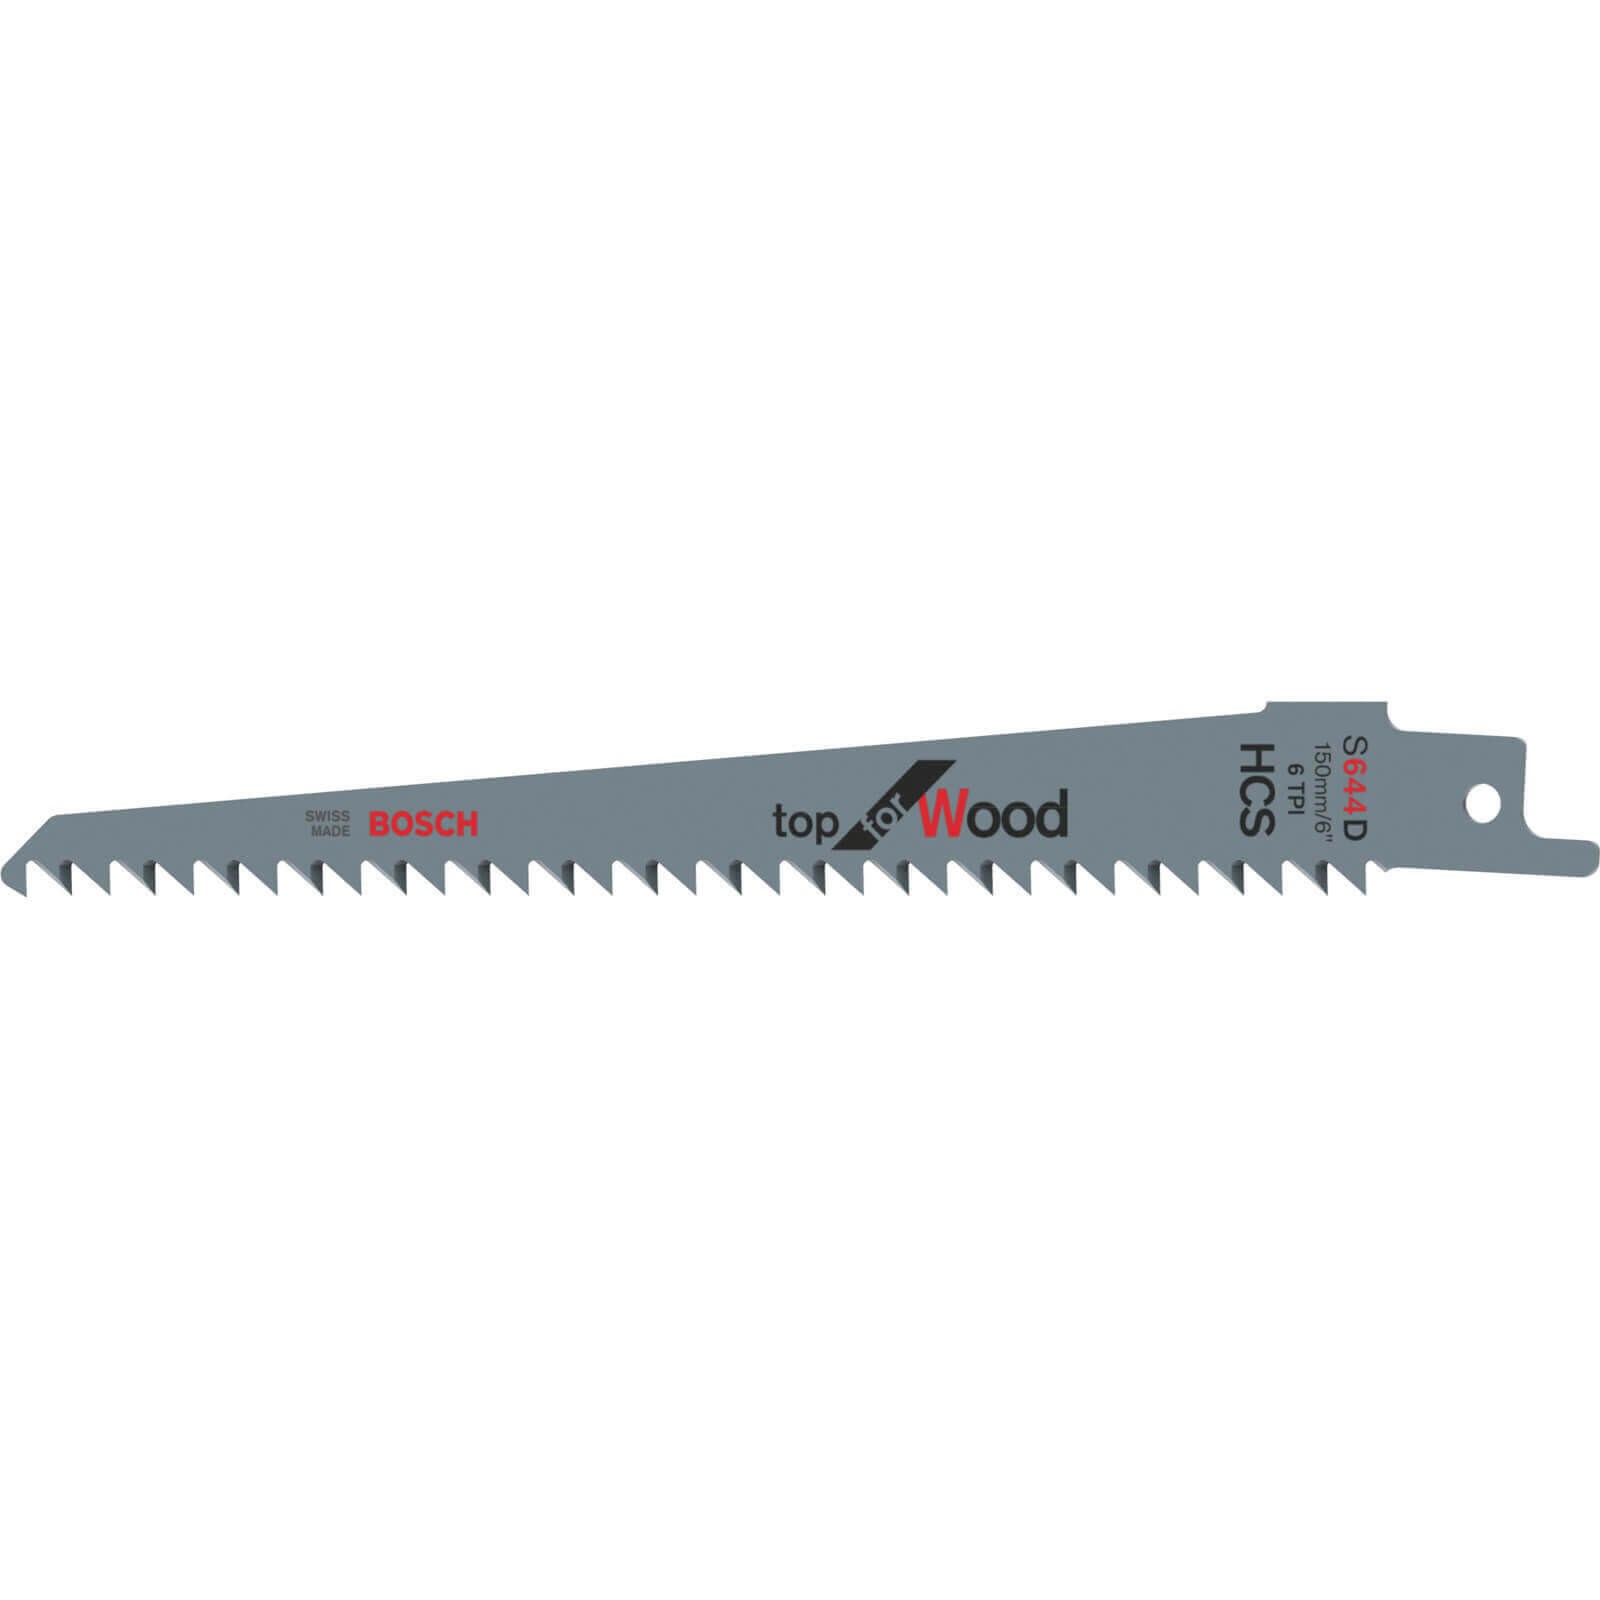 Shark Blades Reciprocating Saw Blades fits Bosch DeWalt Makita SDS S644D x 100